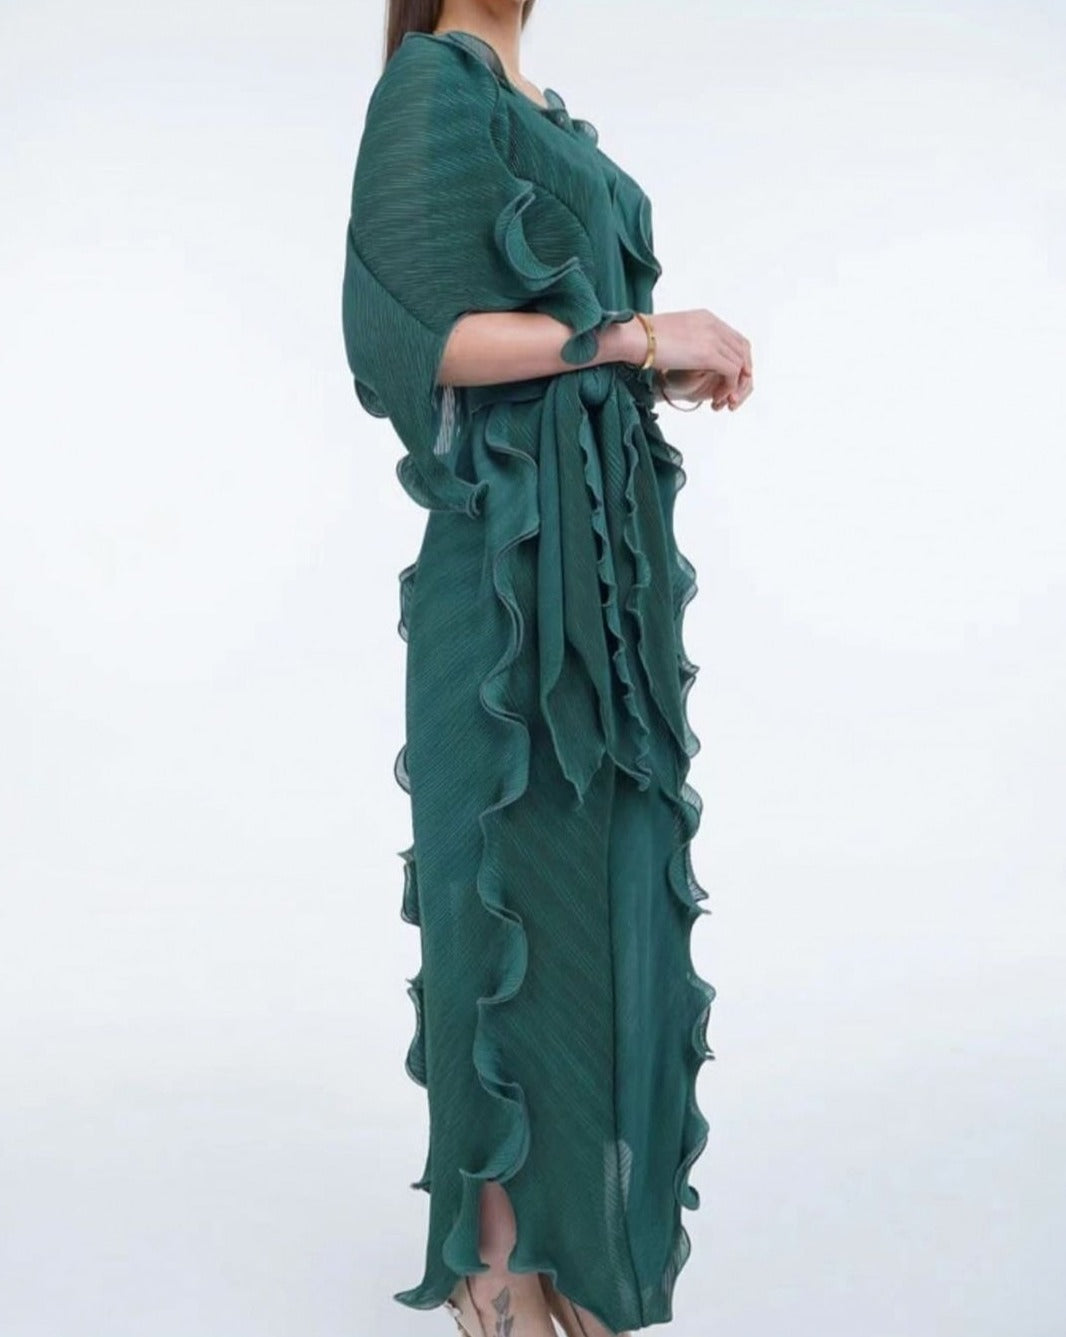 Green ruffle dress with belt - 3